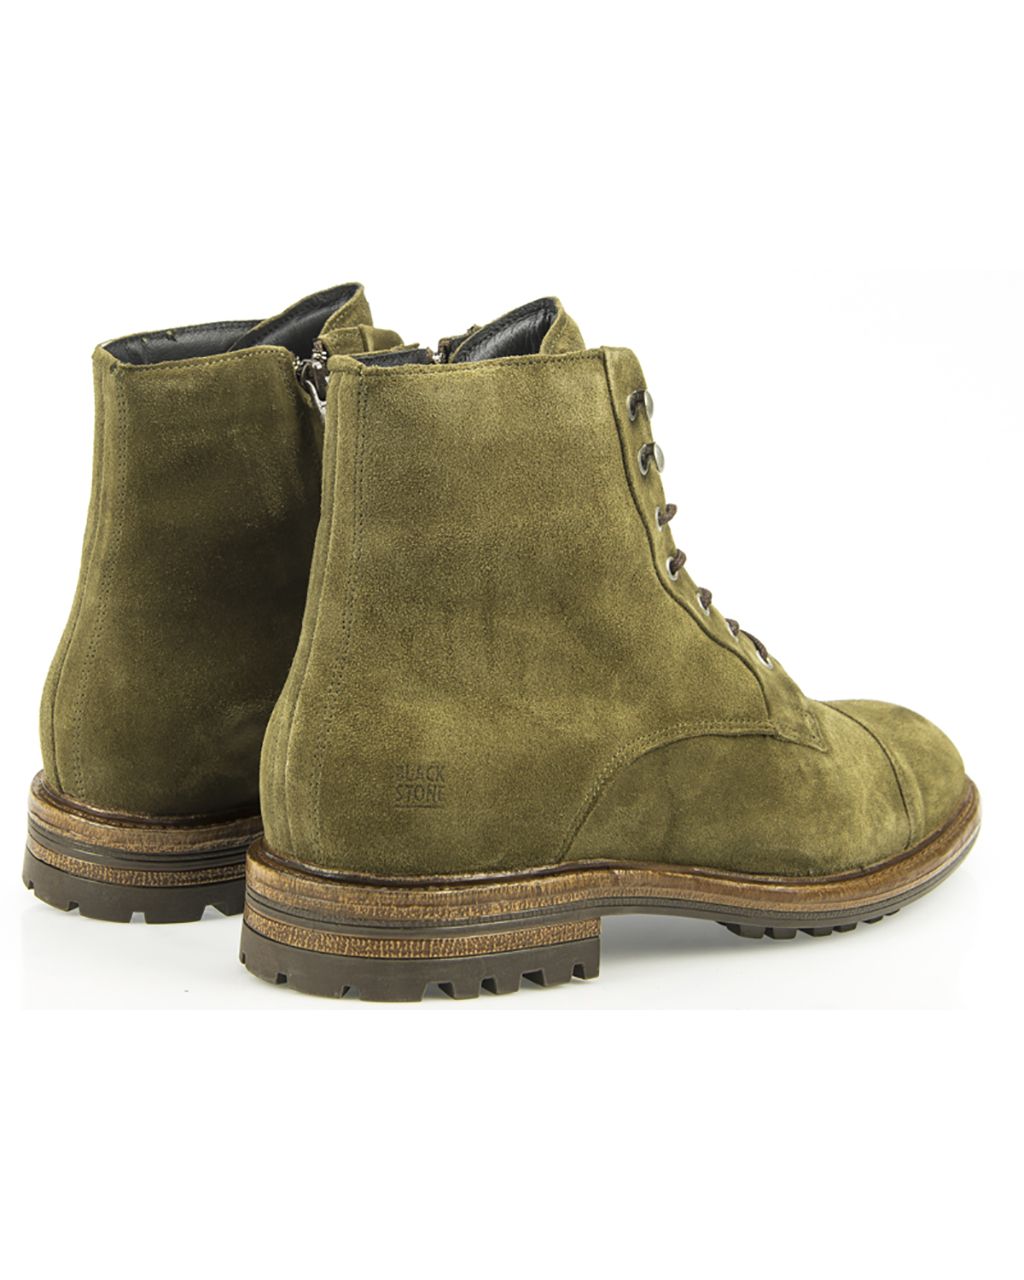 Blackstone Casual Boots Donker groen 073264-001-41